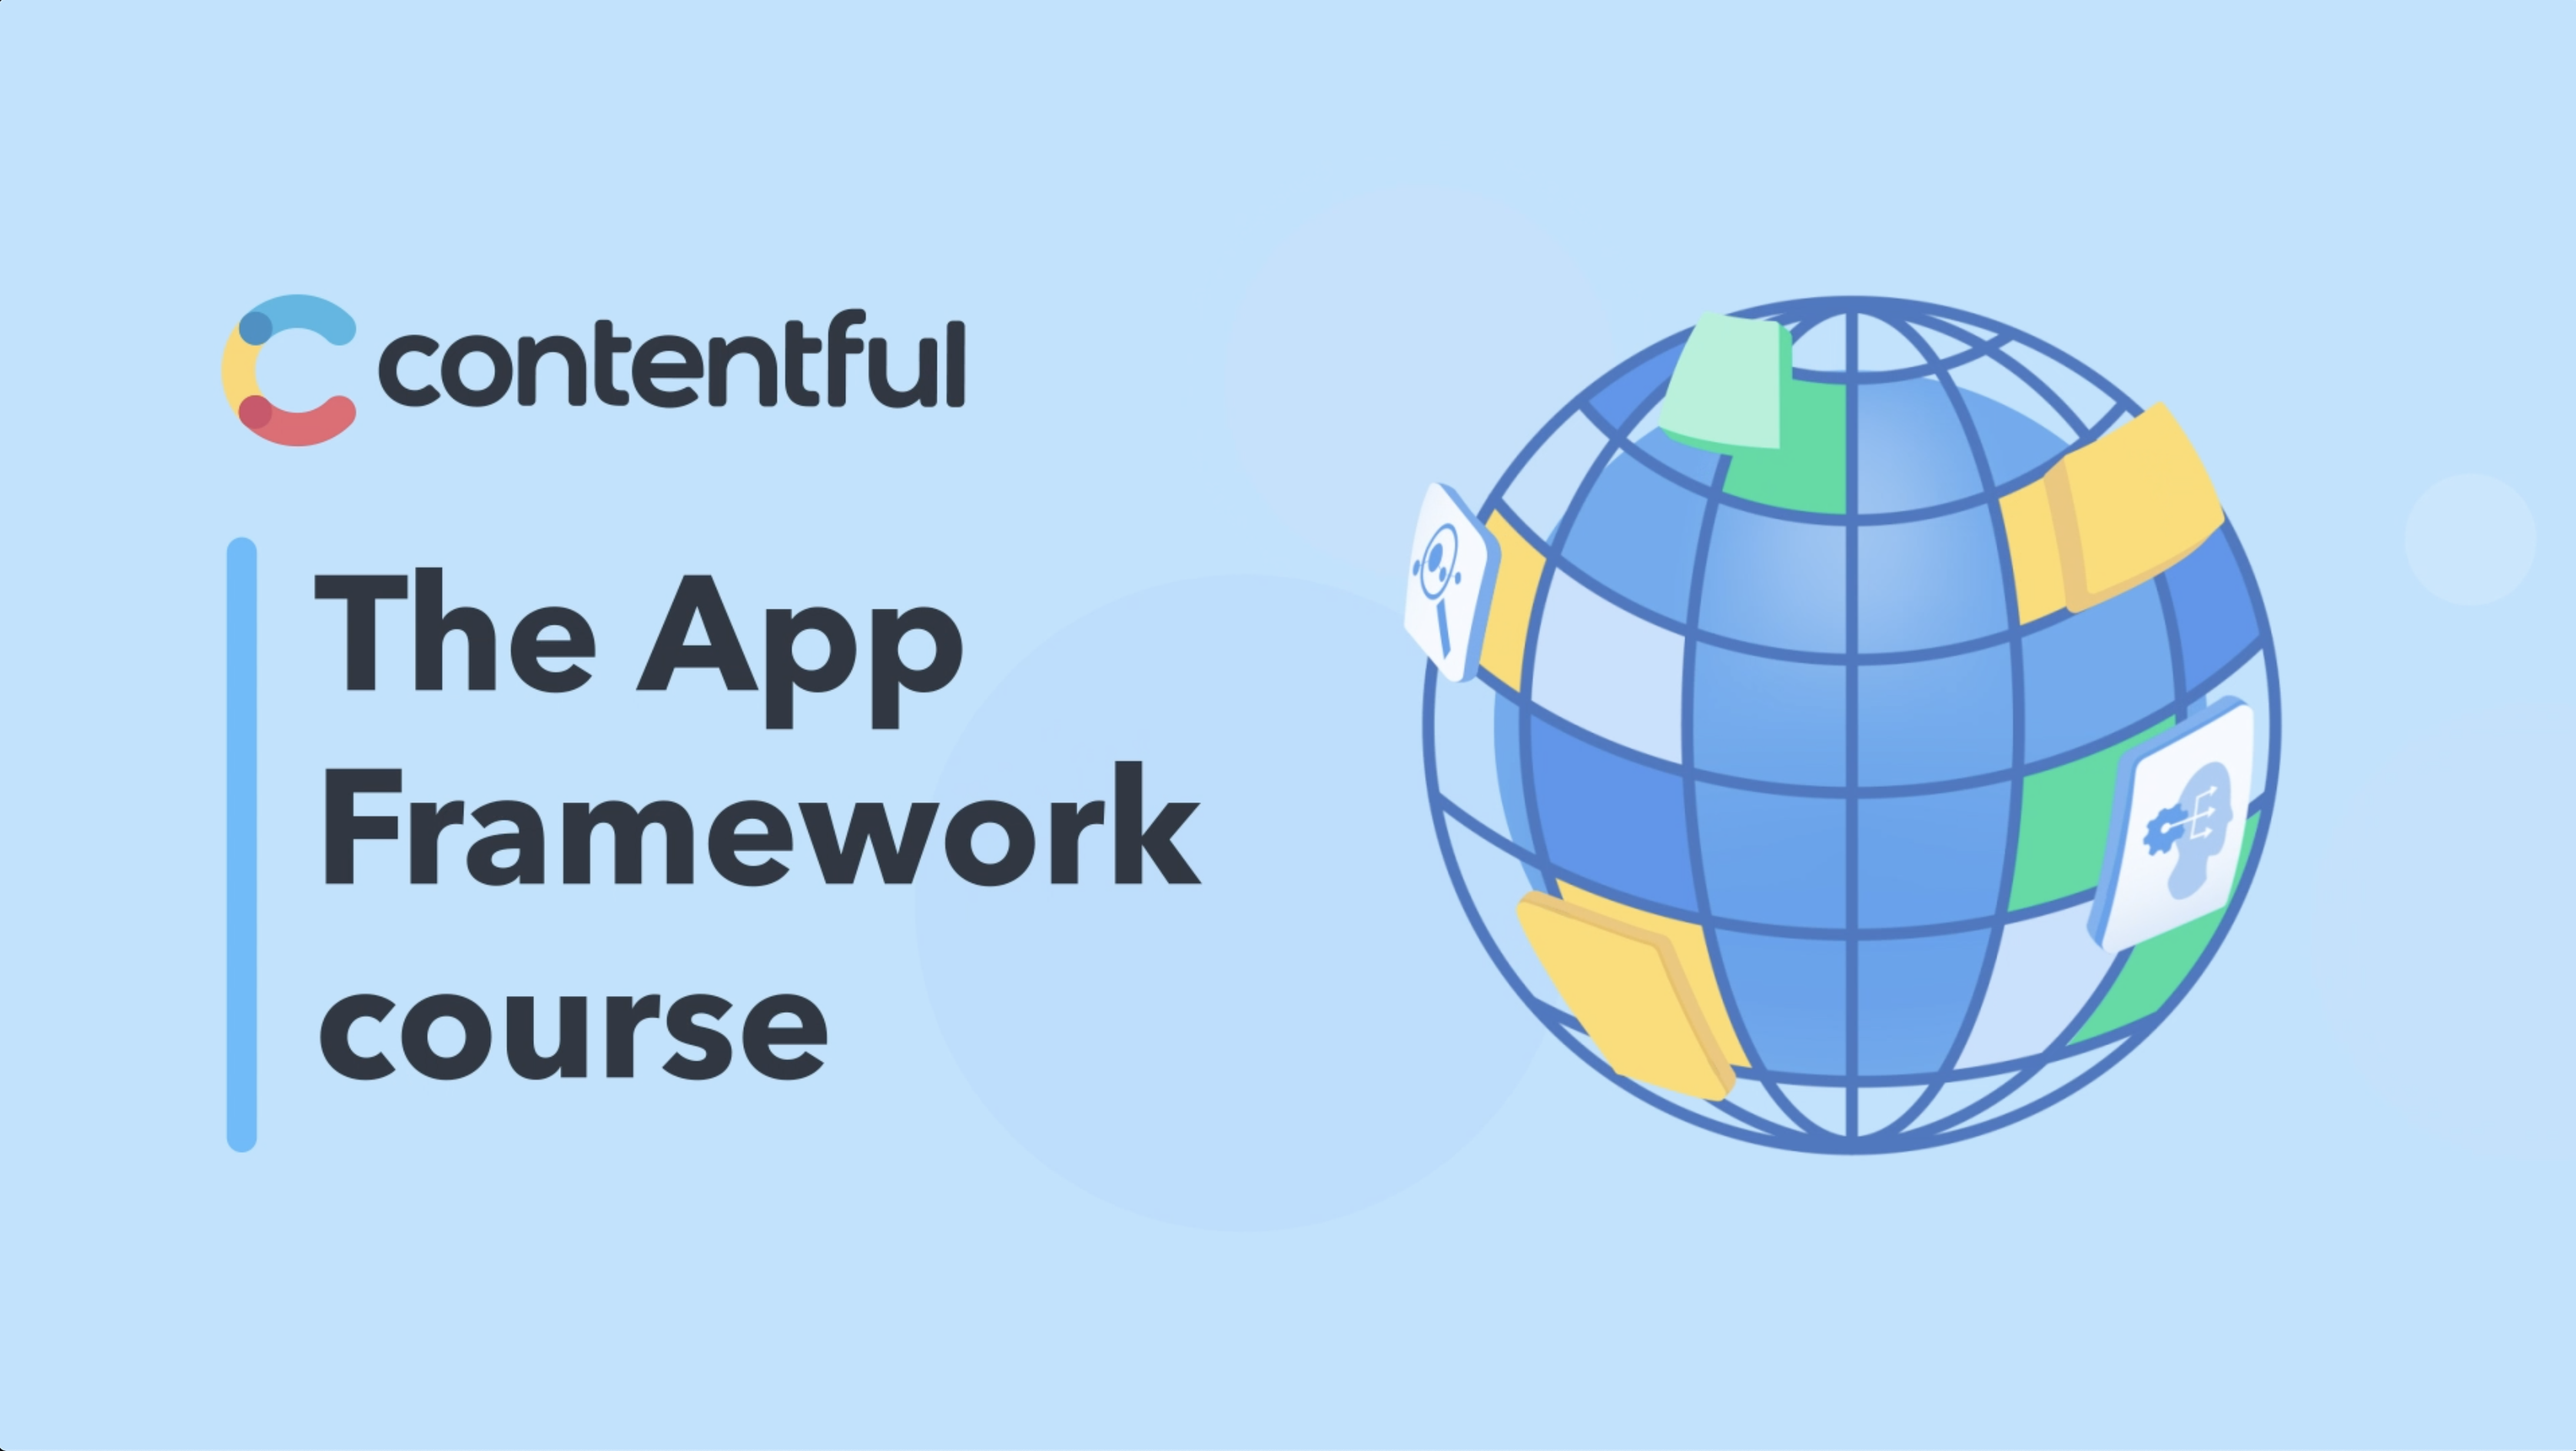 The App Framework course with a world logo